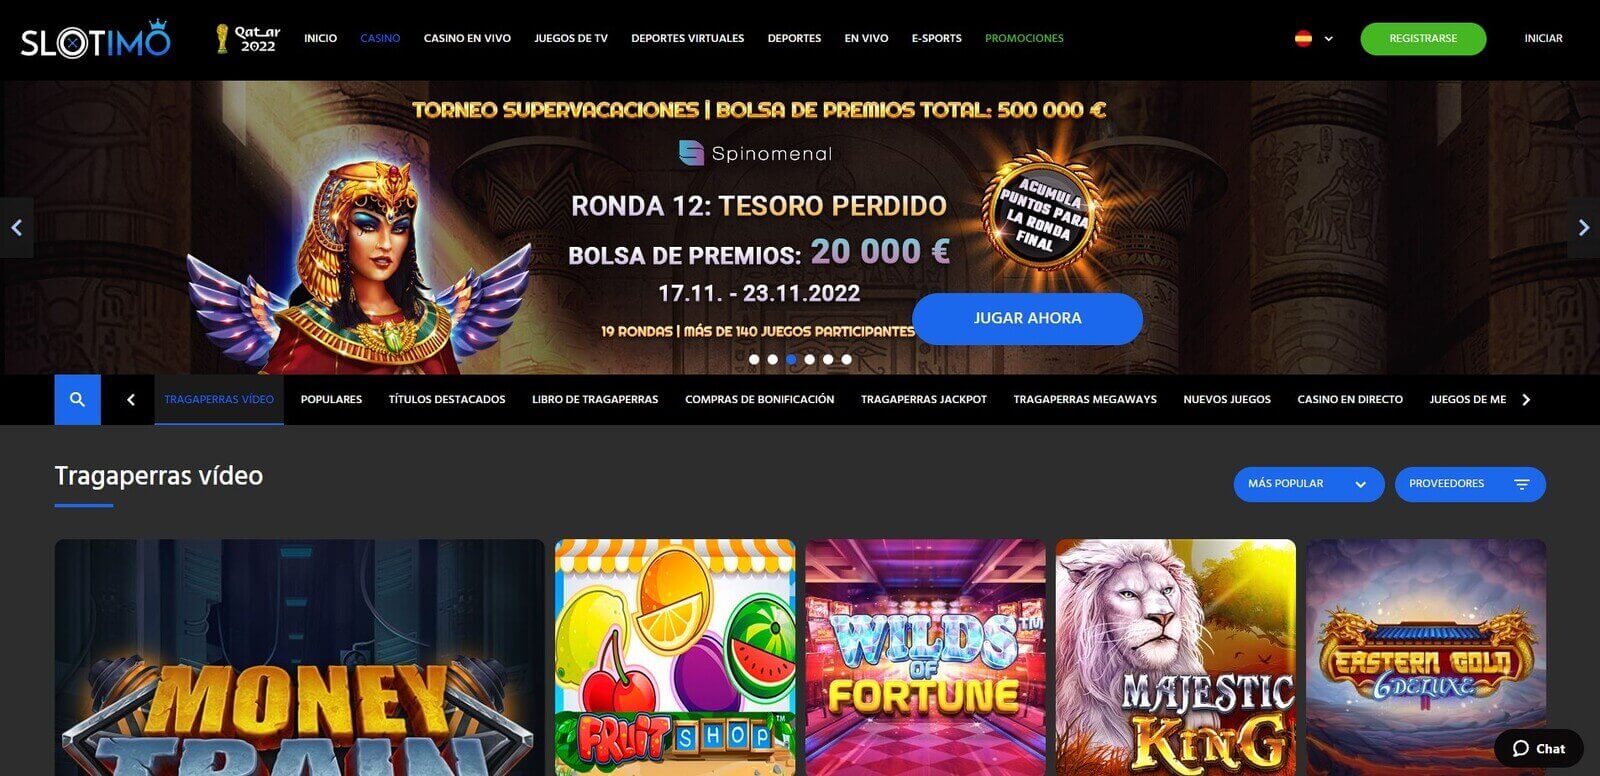 Tragamonedas de Slotimo Casino online en Latinoamérica